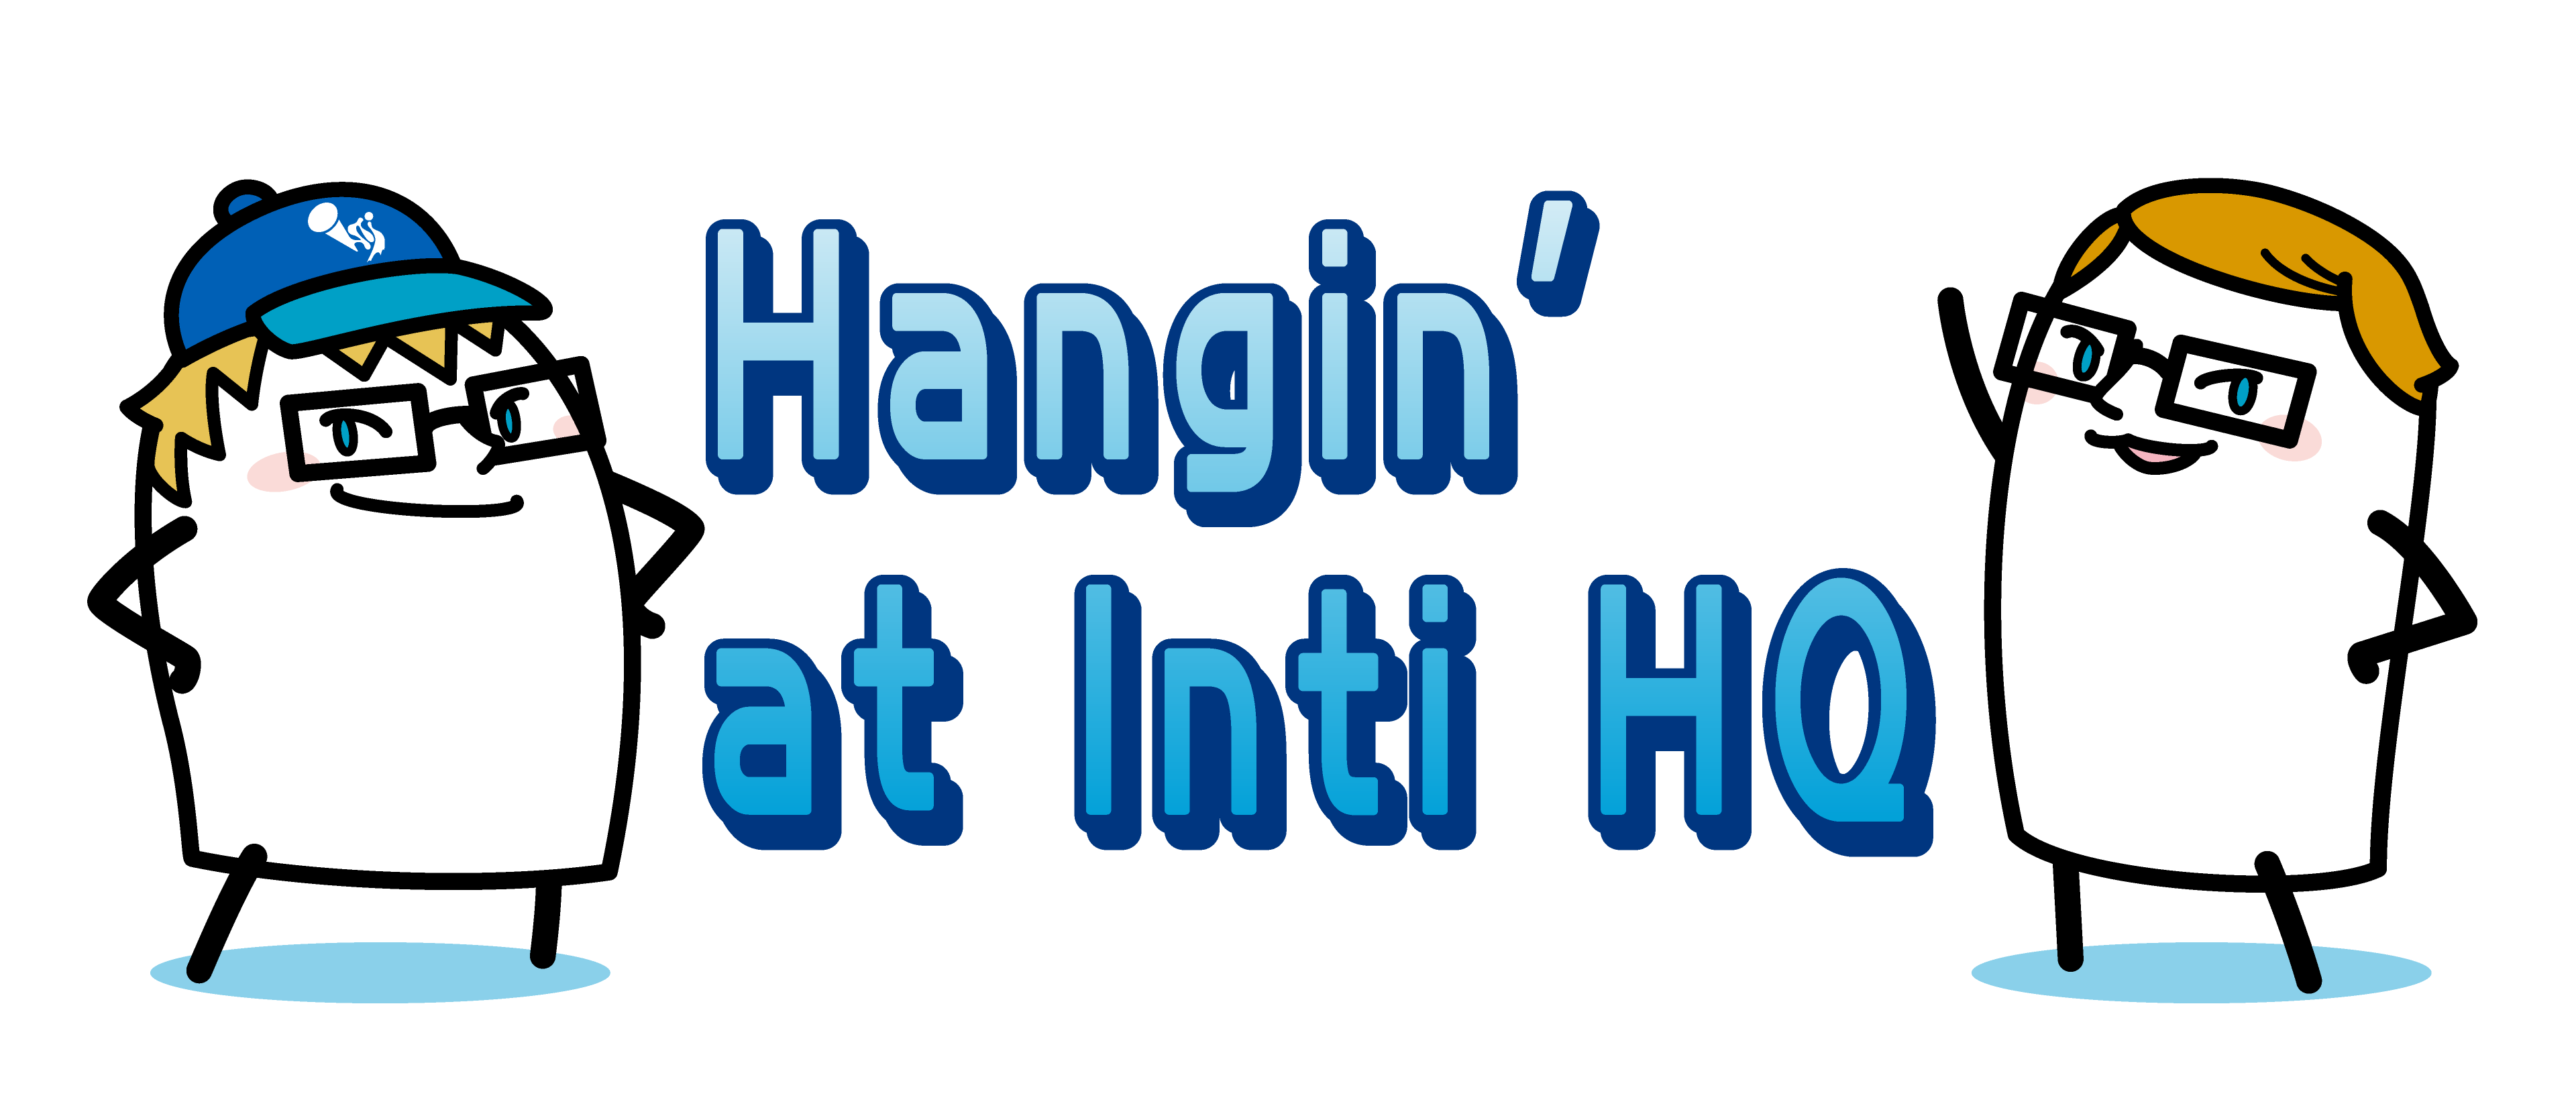 Hangin'-at-IntiHQ_hetare1_L